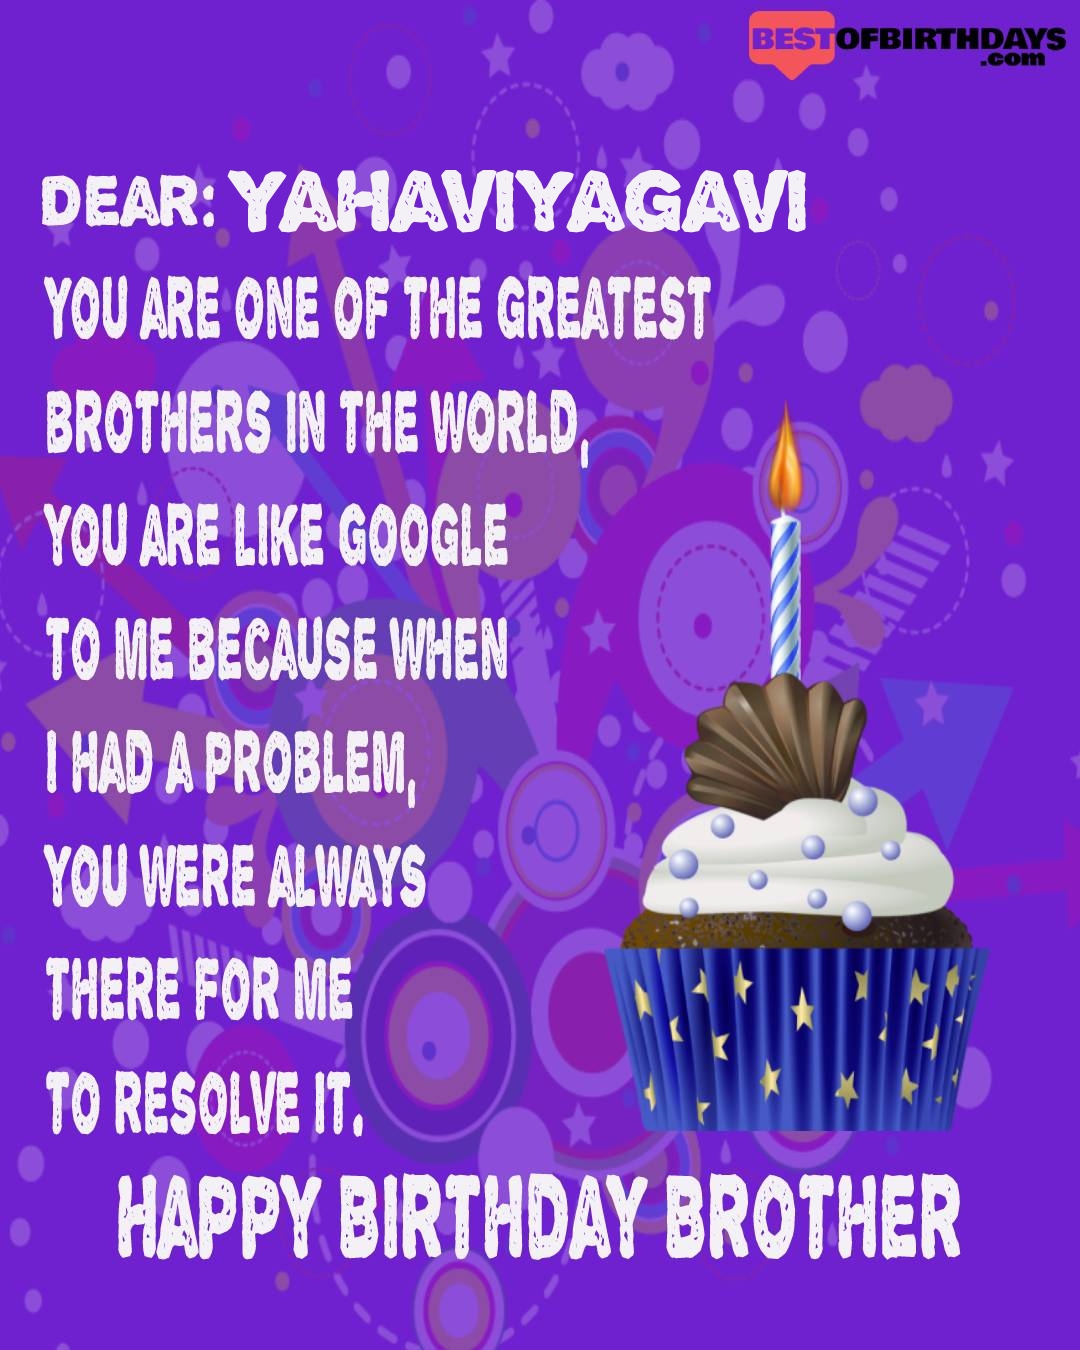 Happy birthday yahaviyagavi bhai brother bro